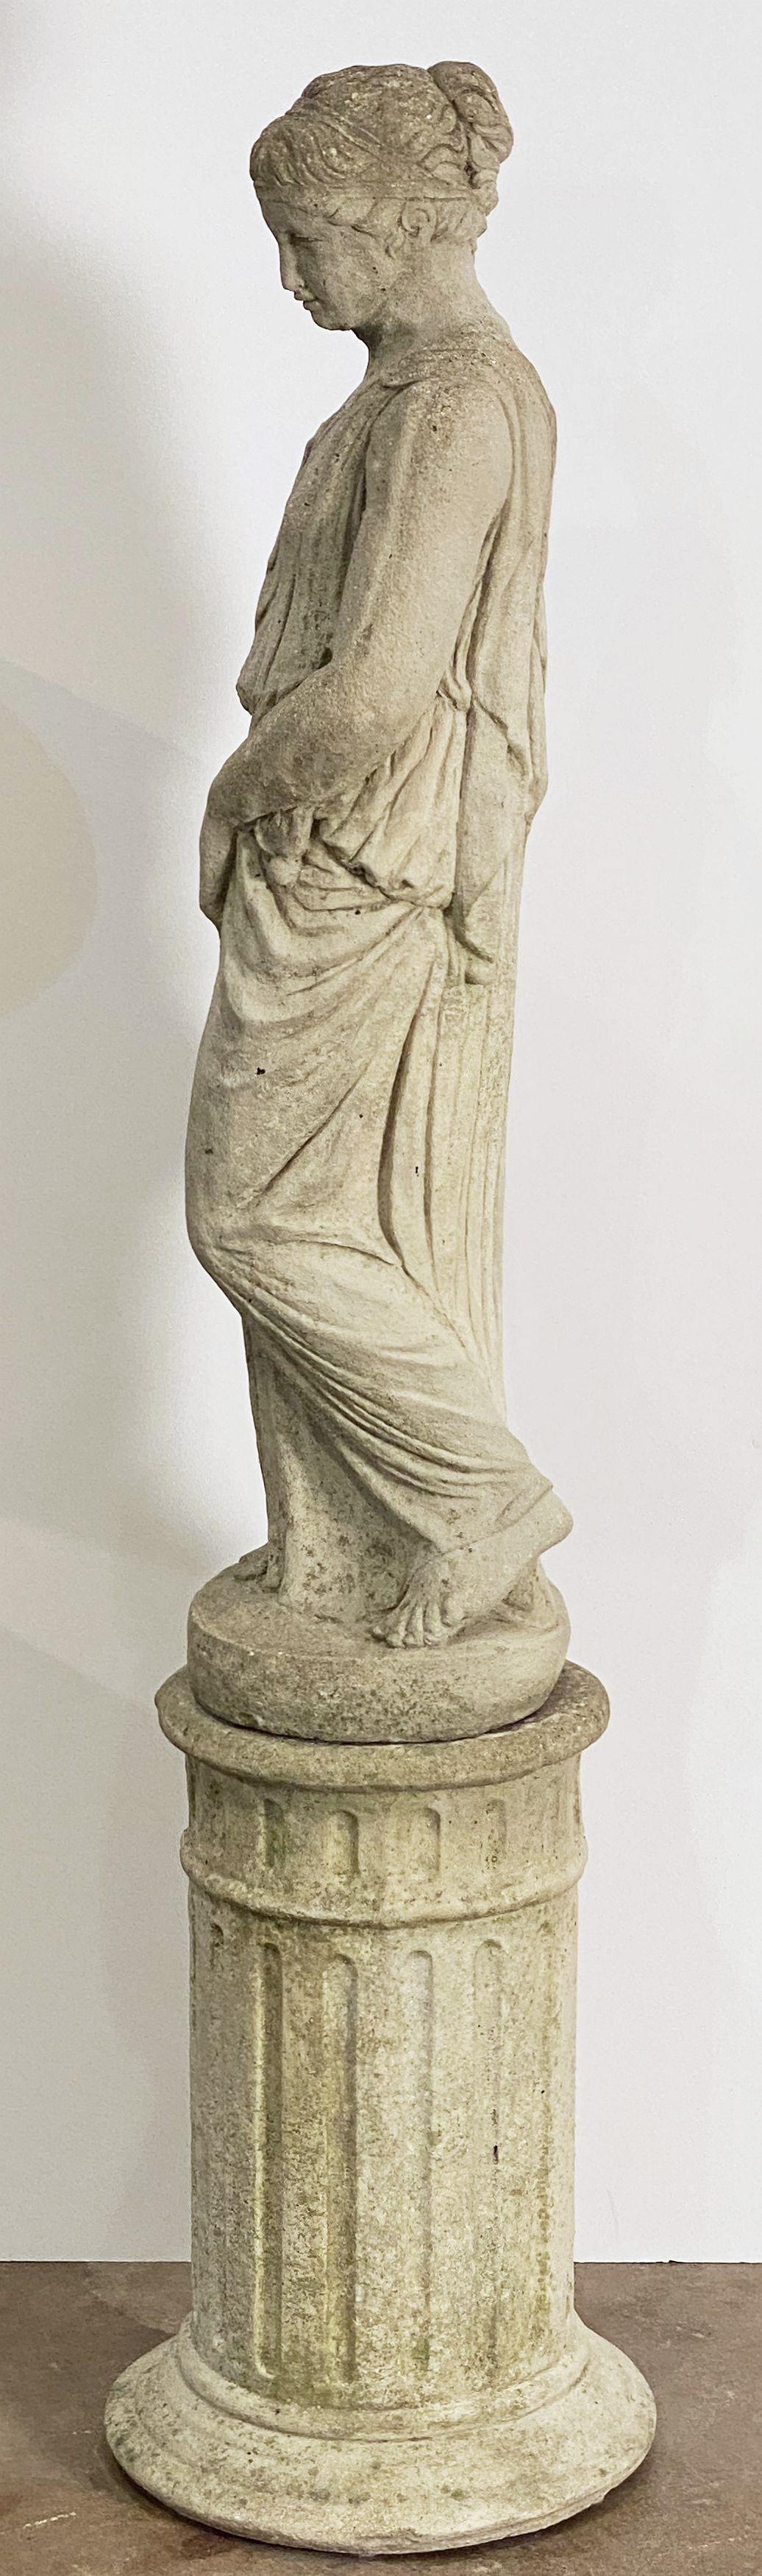 Large English Garden Stone Statue of a Maiden on Column Pedestal (H 59 1/4) 5